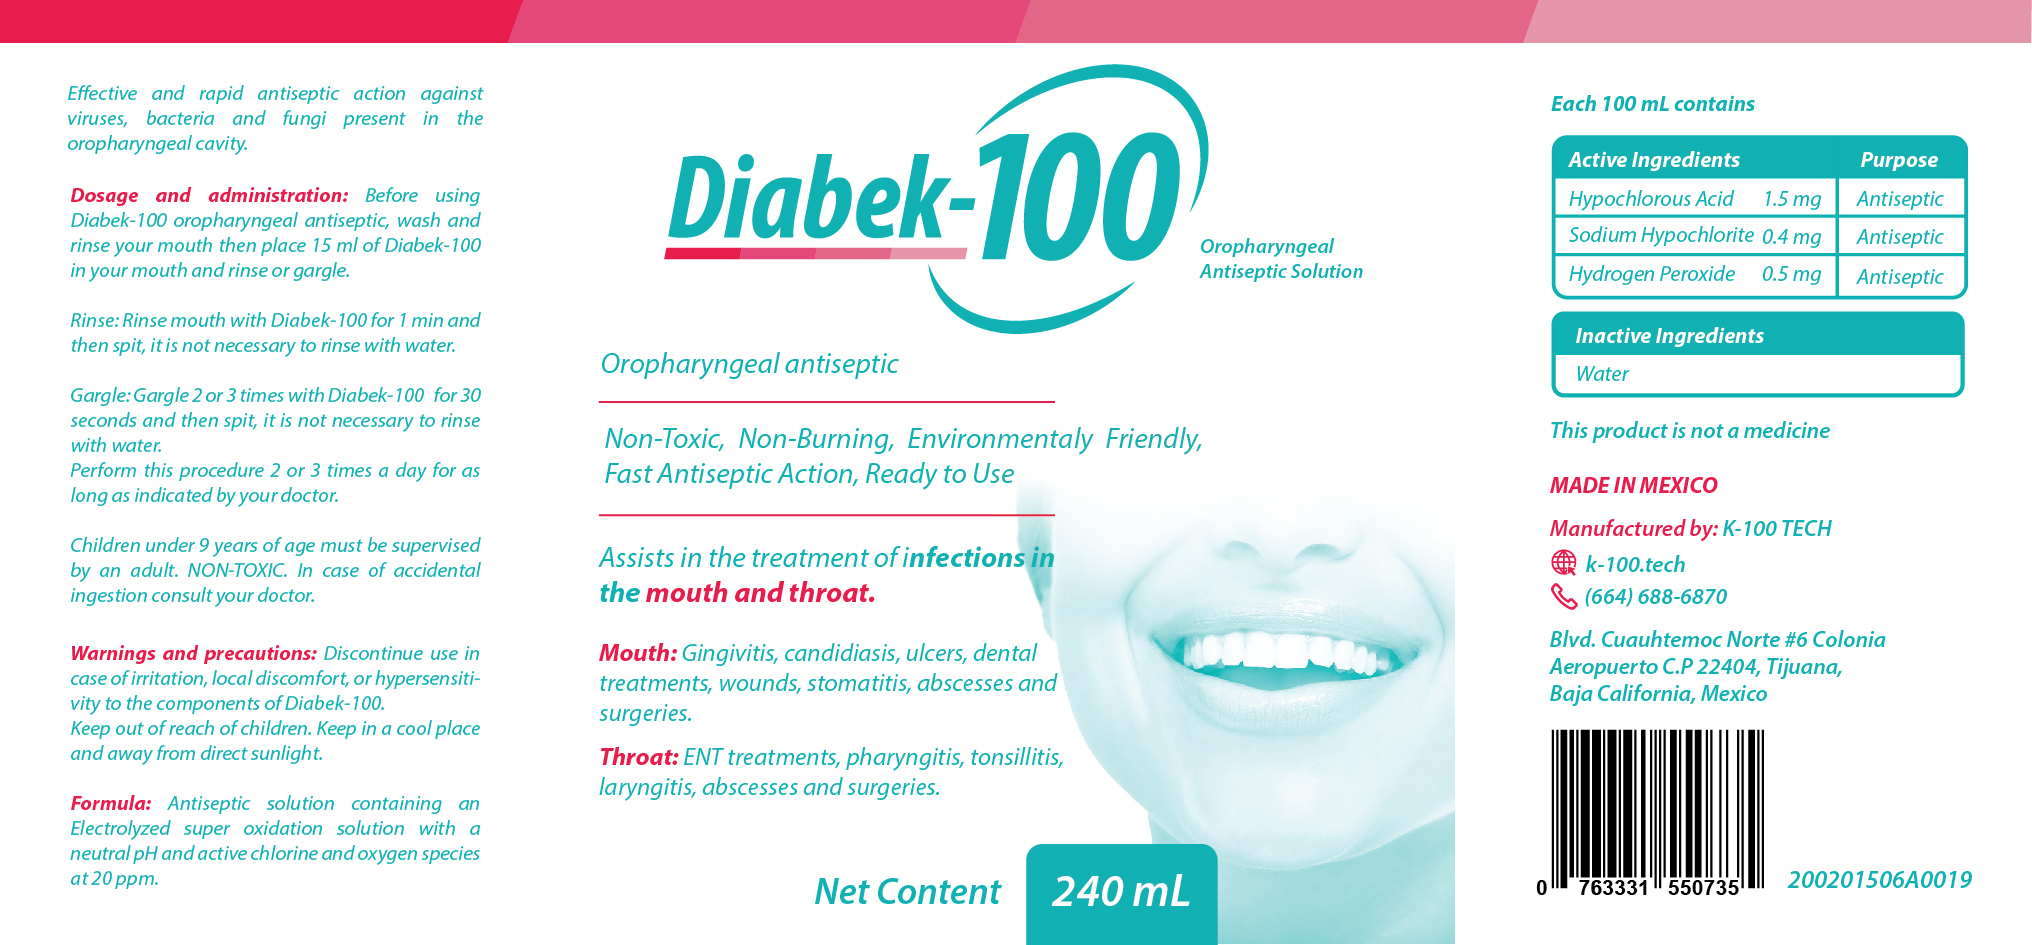 diabek-100 Oropharyngeal Antiseptic Solution